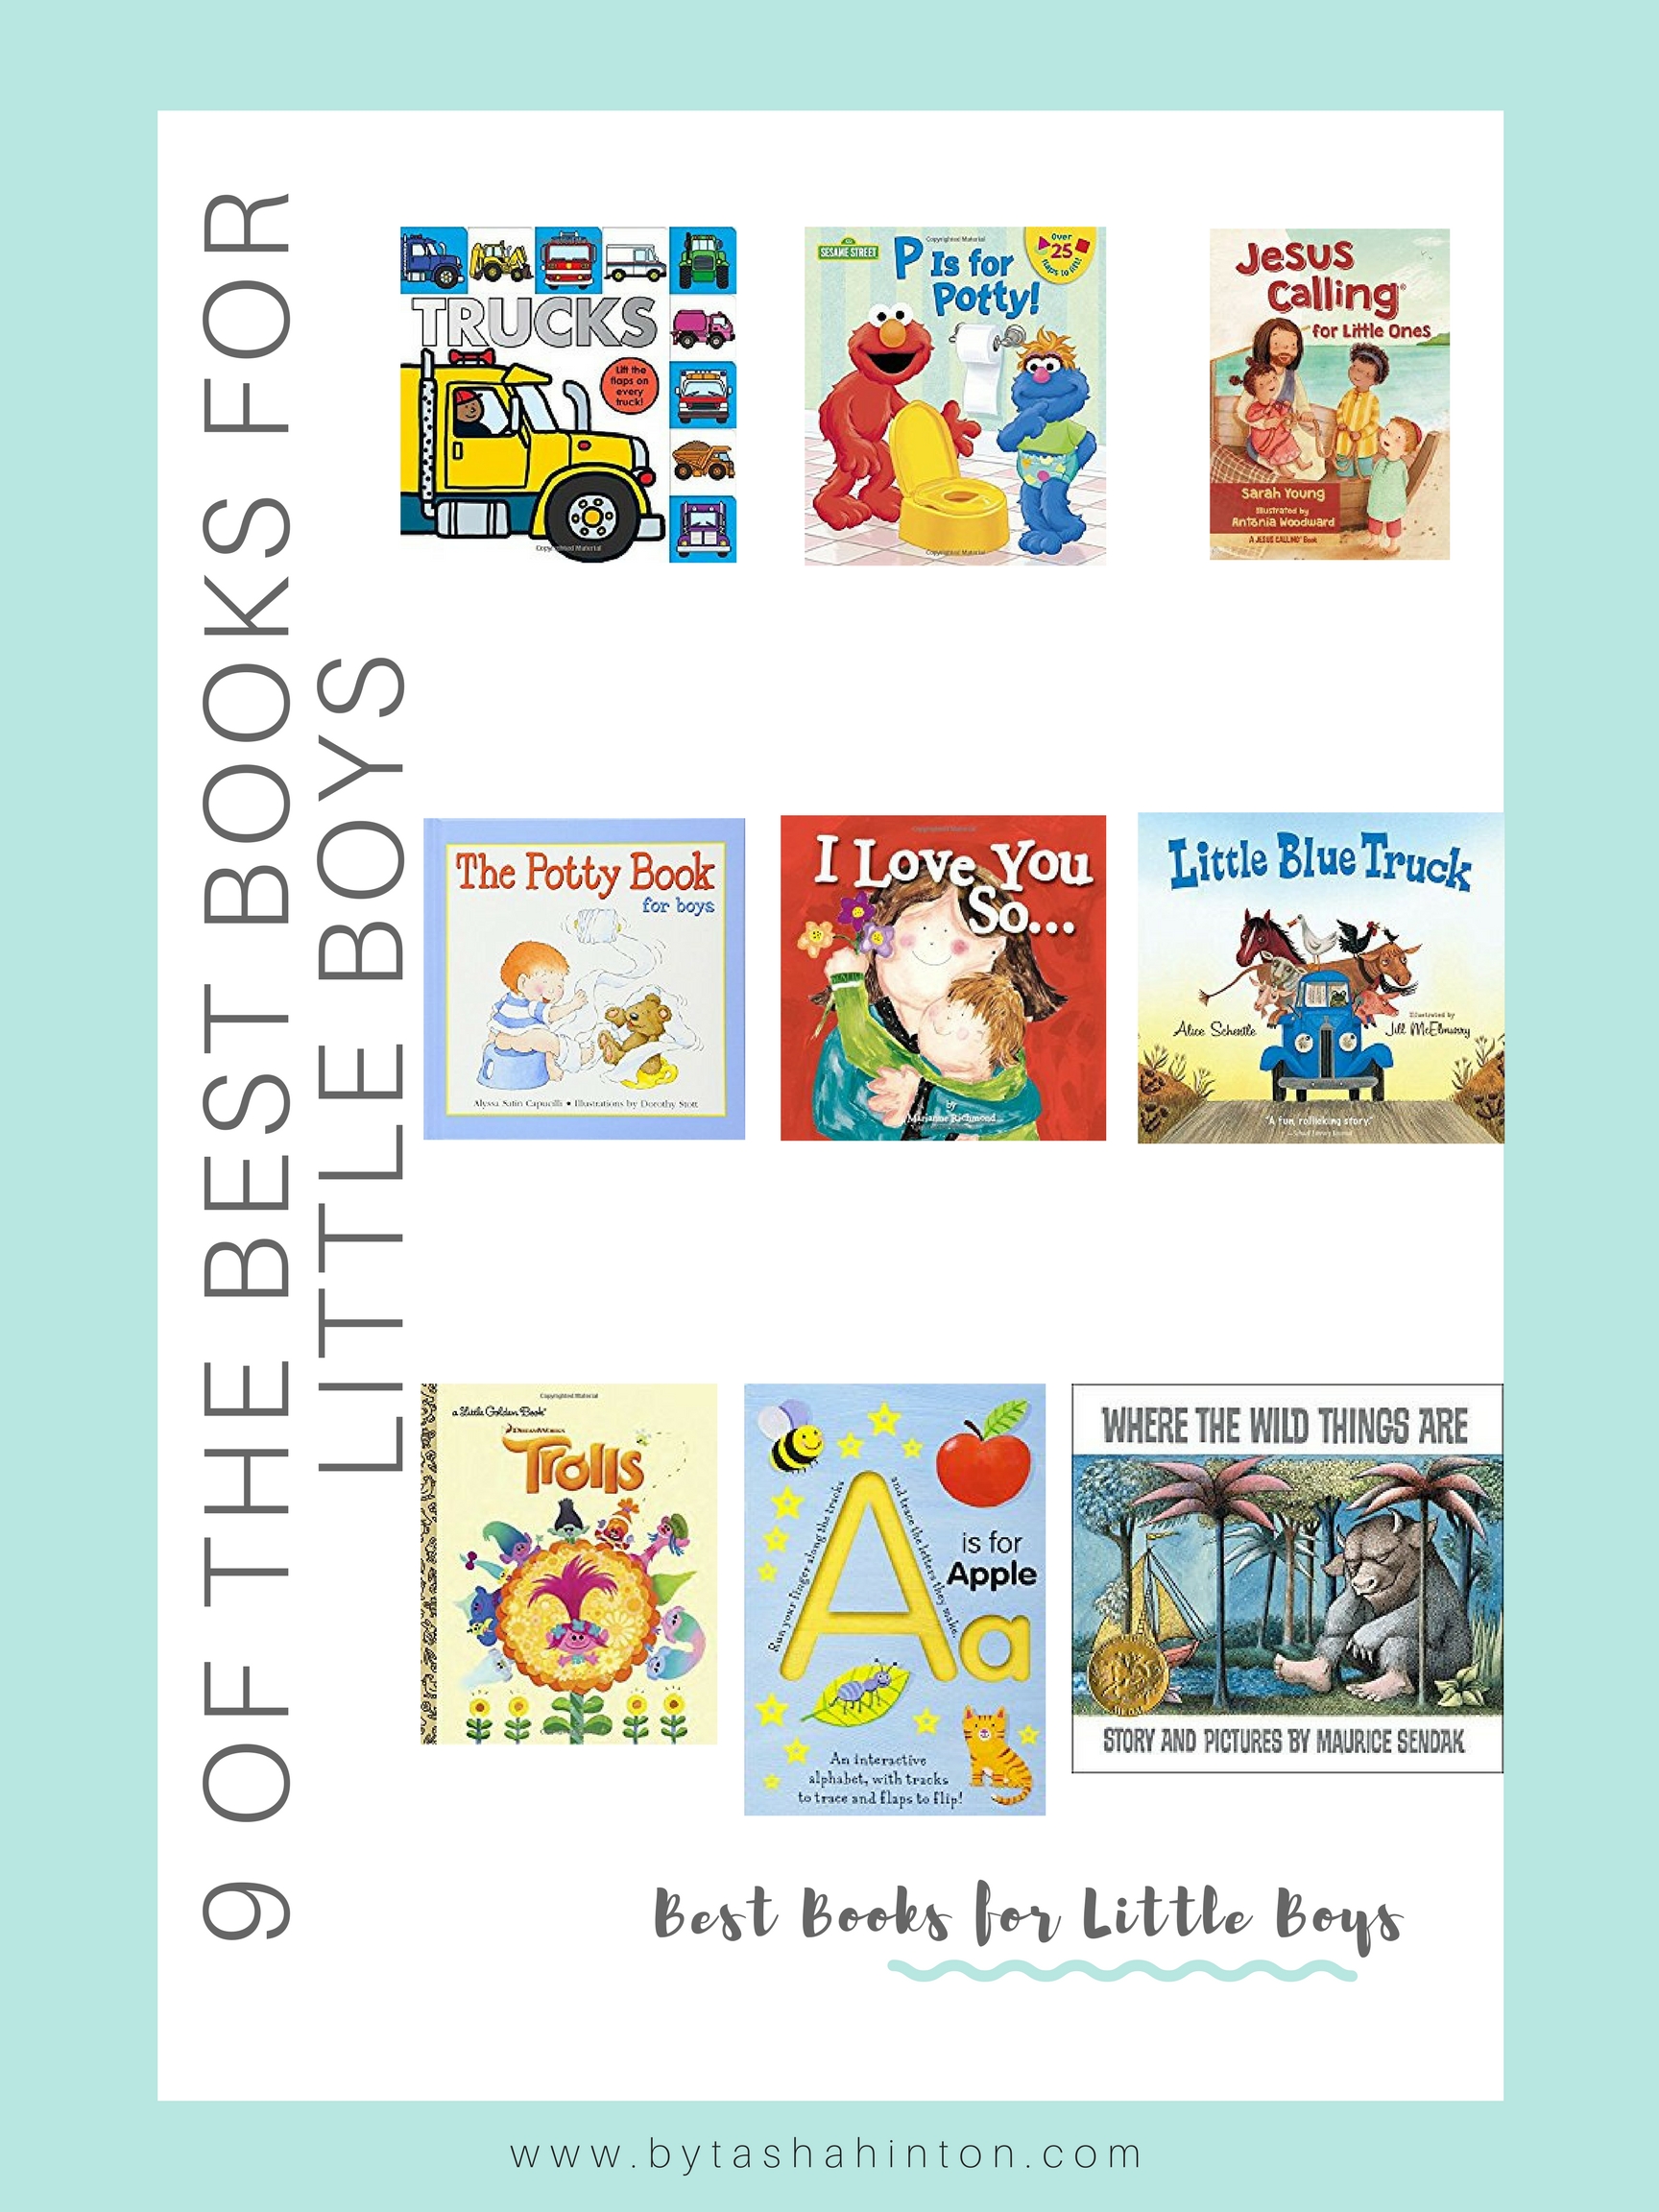 9 of the best books for little boys